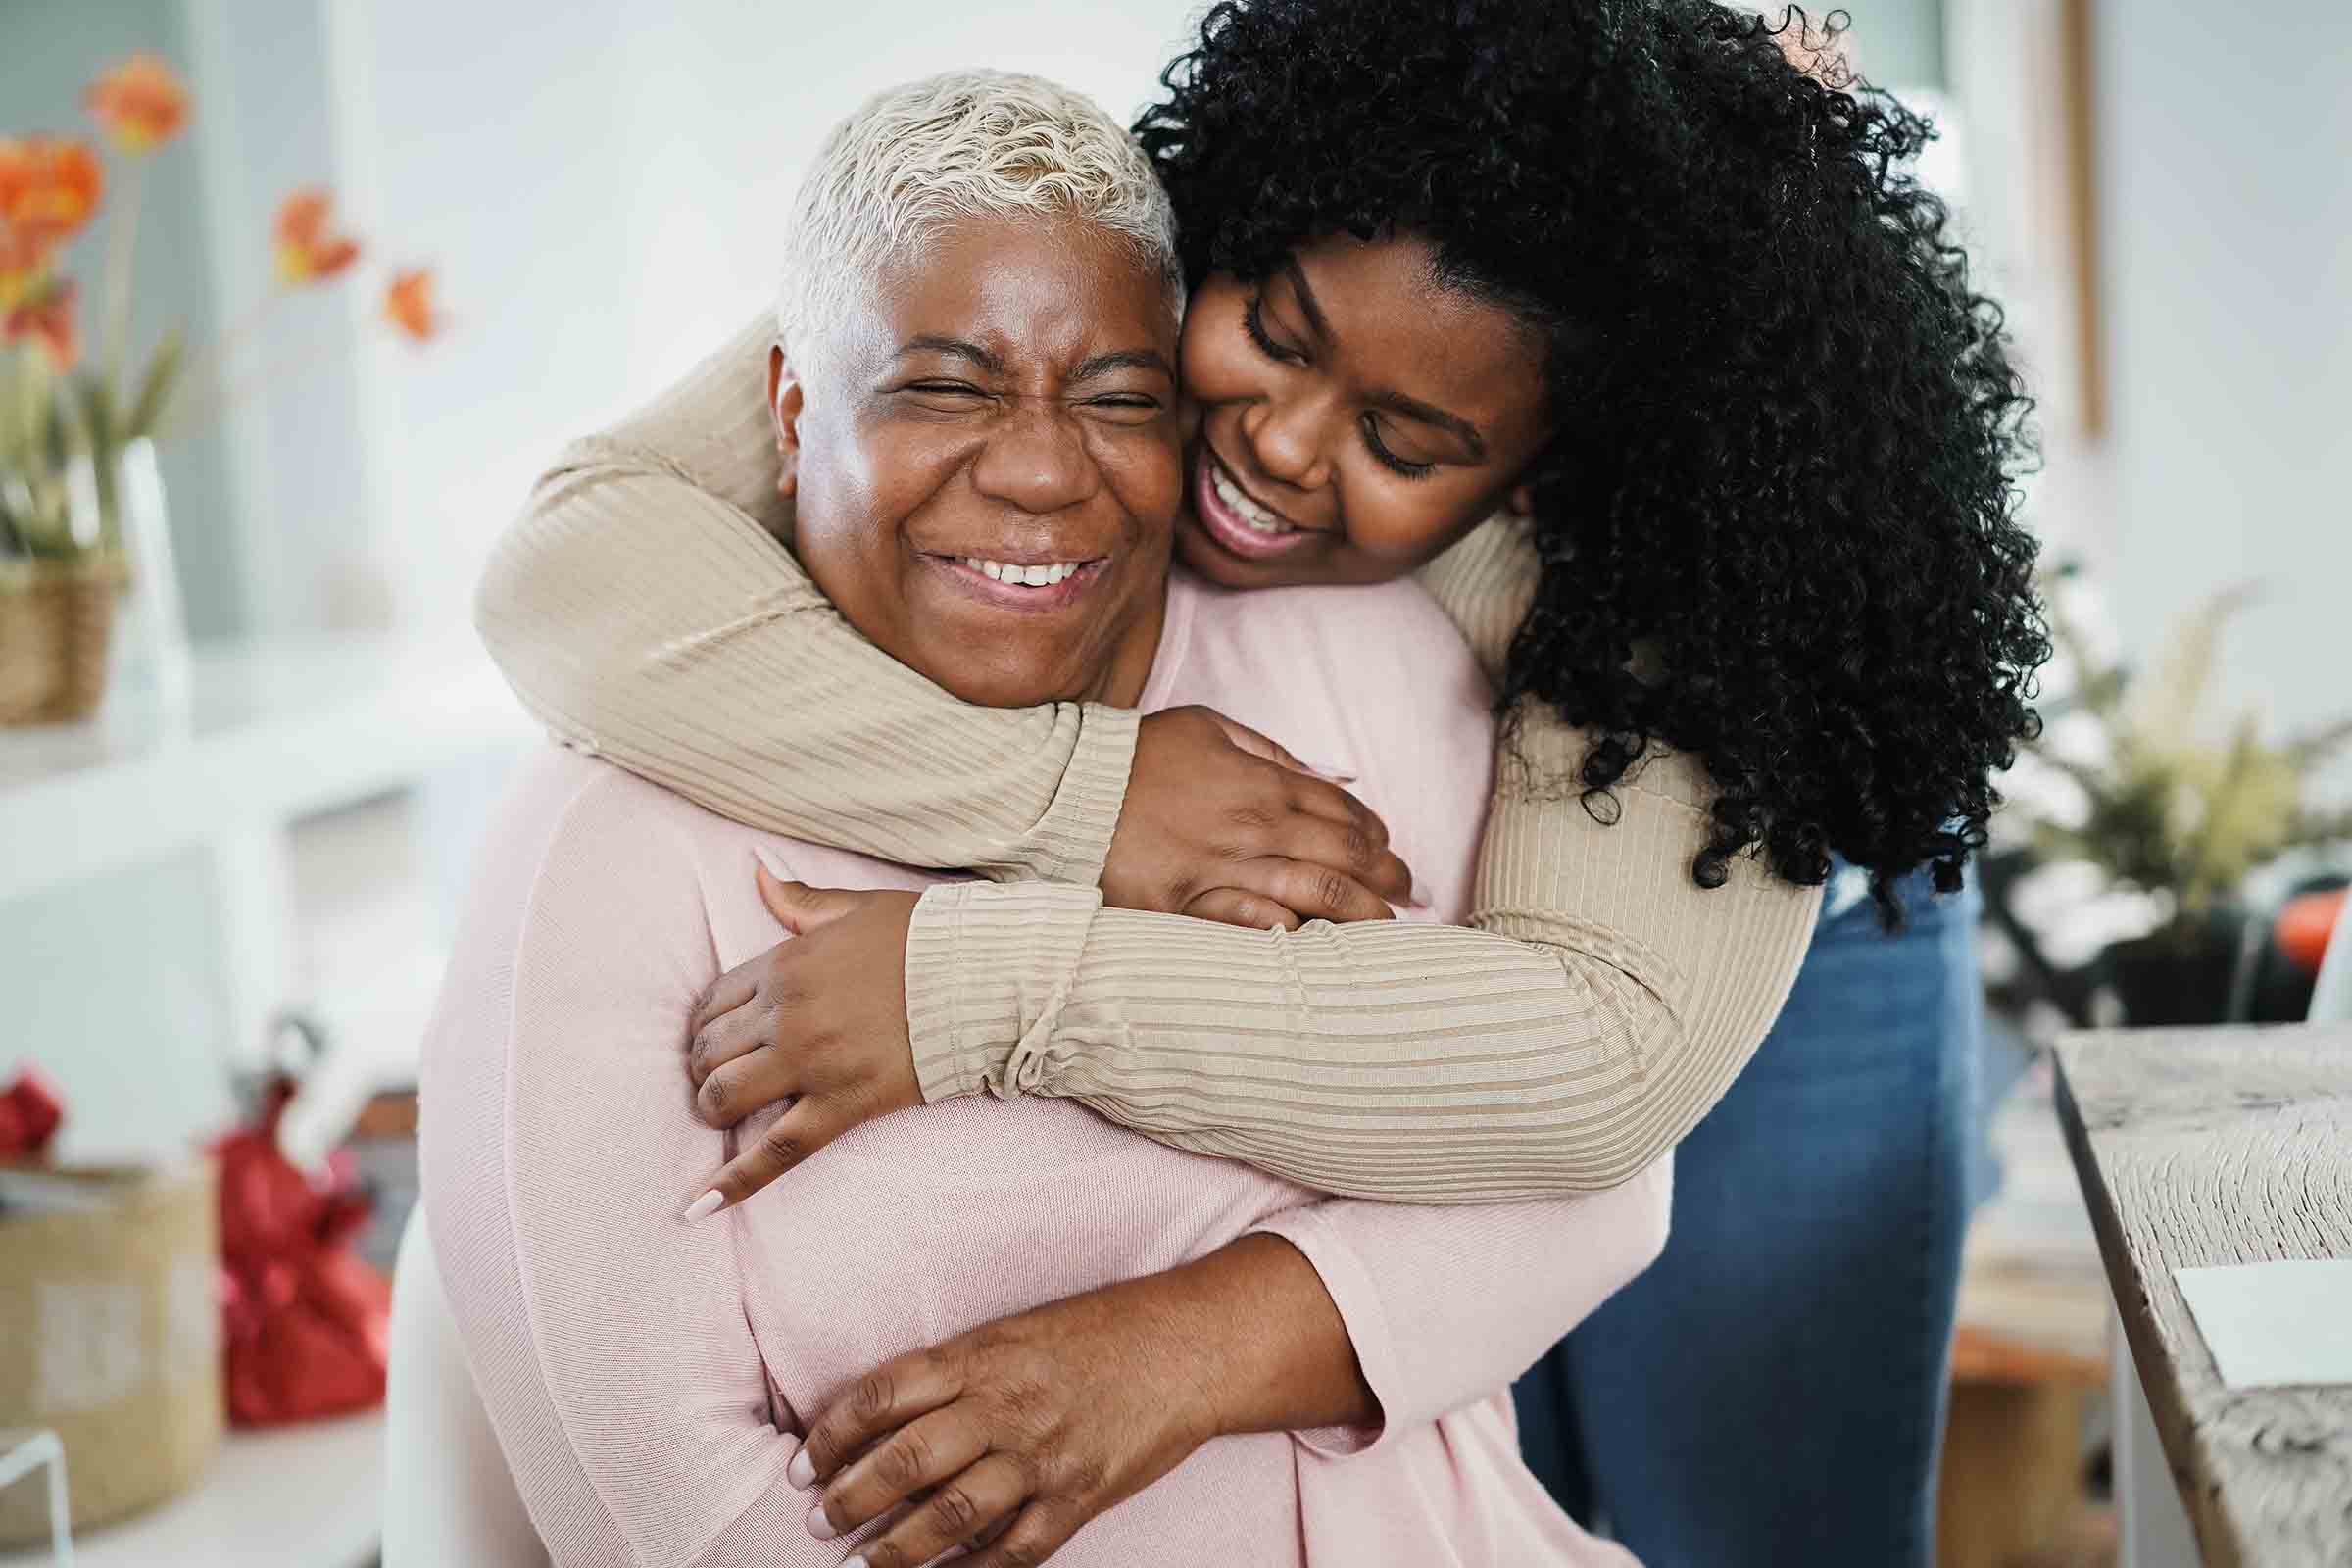 African American daughter hugging her mum indoors at home - Main focus on senior woman face